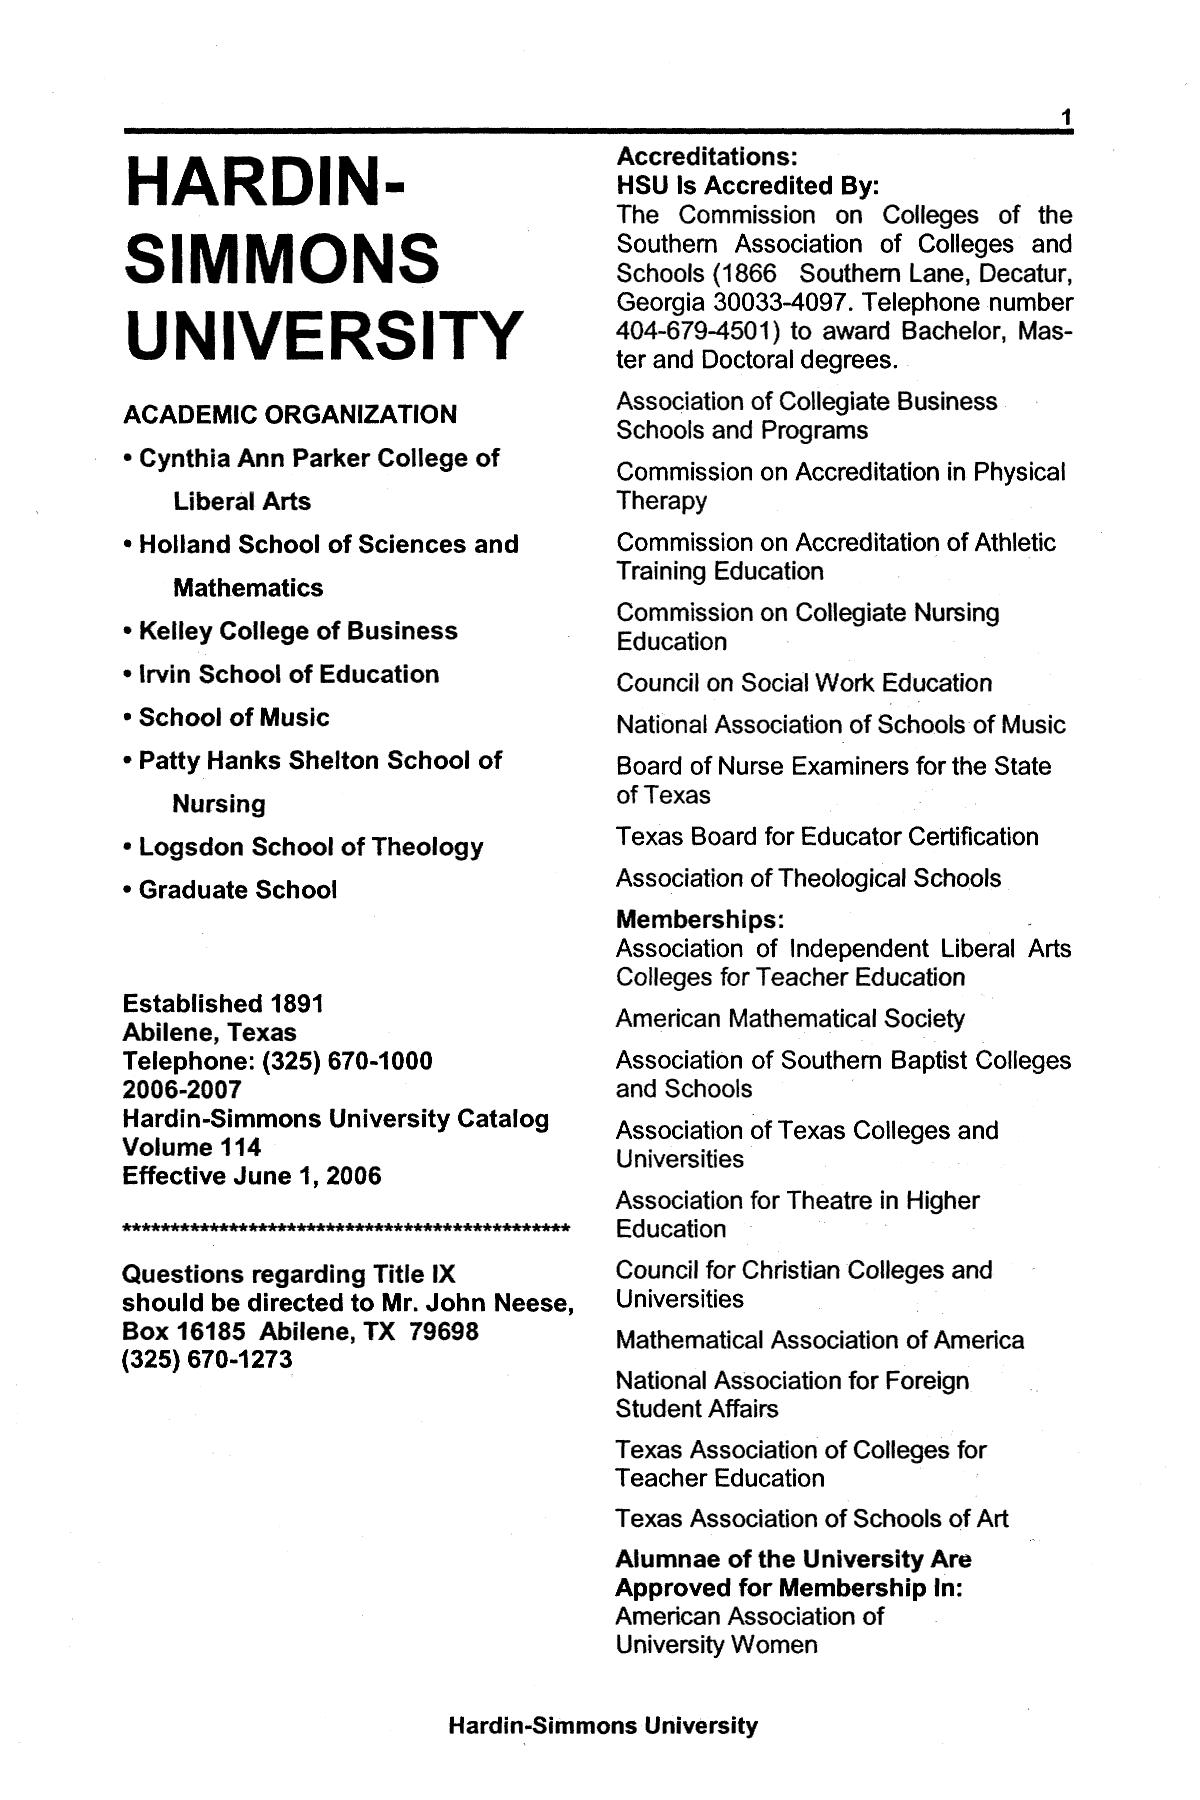 Catalog of Hardin-Simmons University, 2006-2007 Undergraduate Bulletin
                                                
                                                    1
                                                